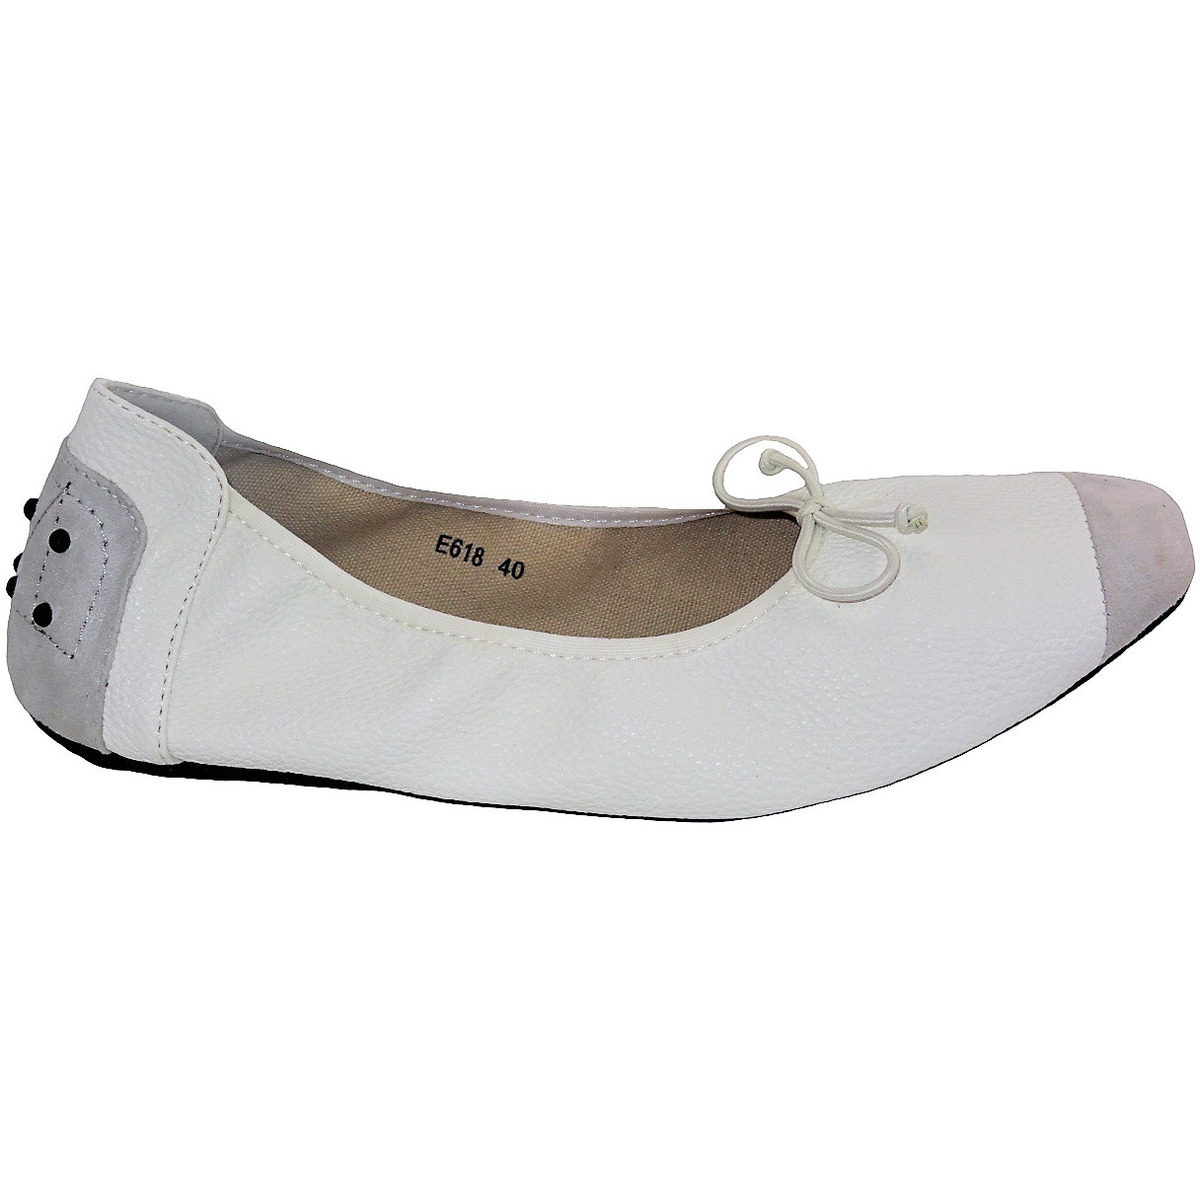 Chaussures Femme Newlife - Seconde Main E618 BLANC